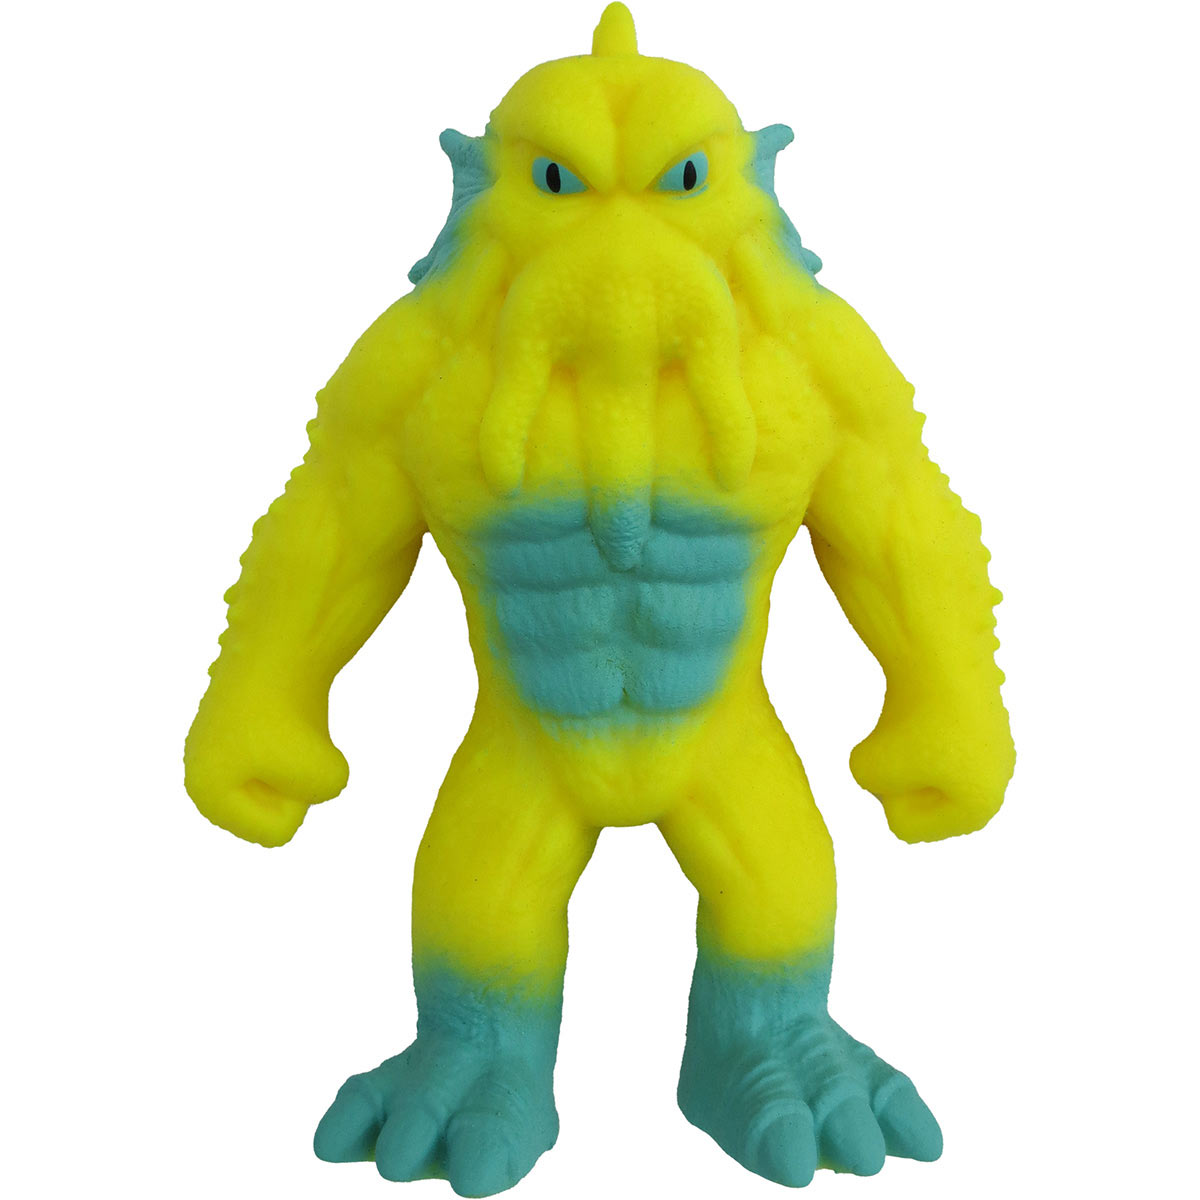 Boneco 15cm que estica Octofish - Stretchapalz Monster